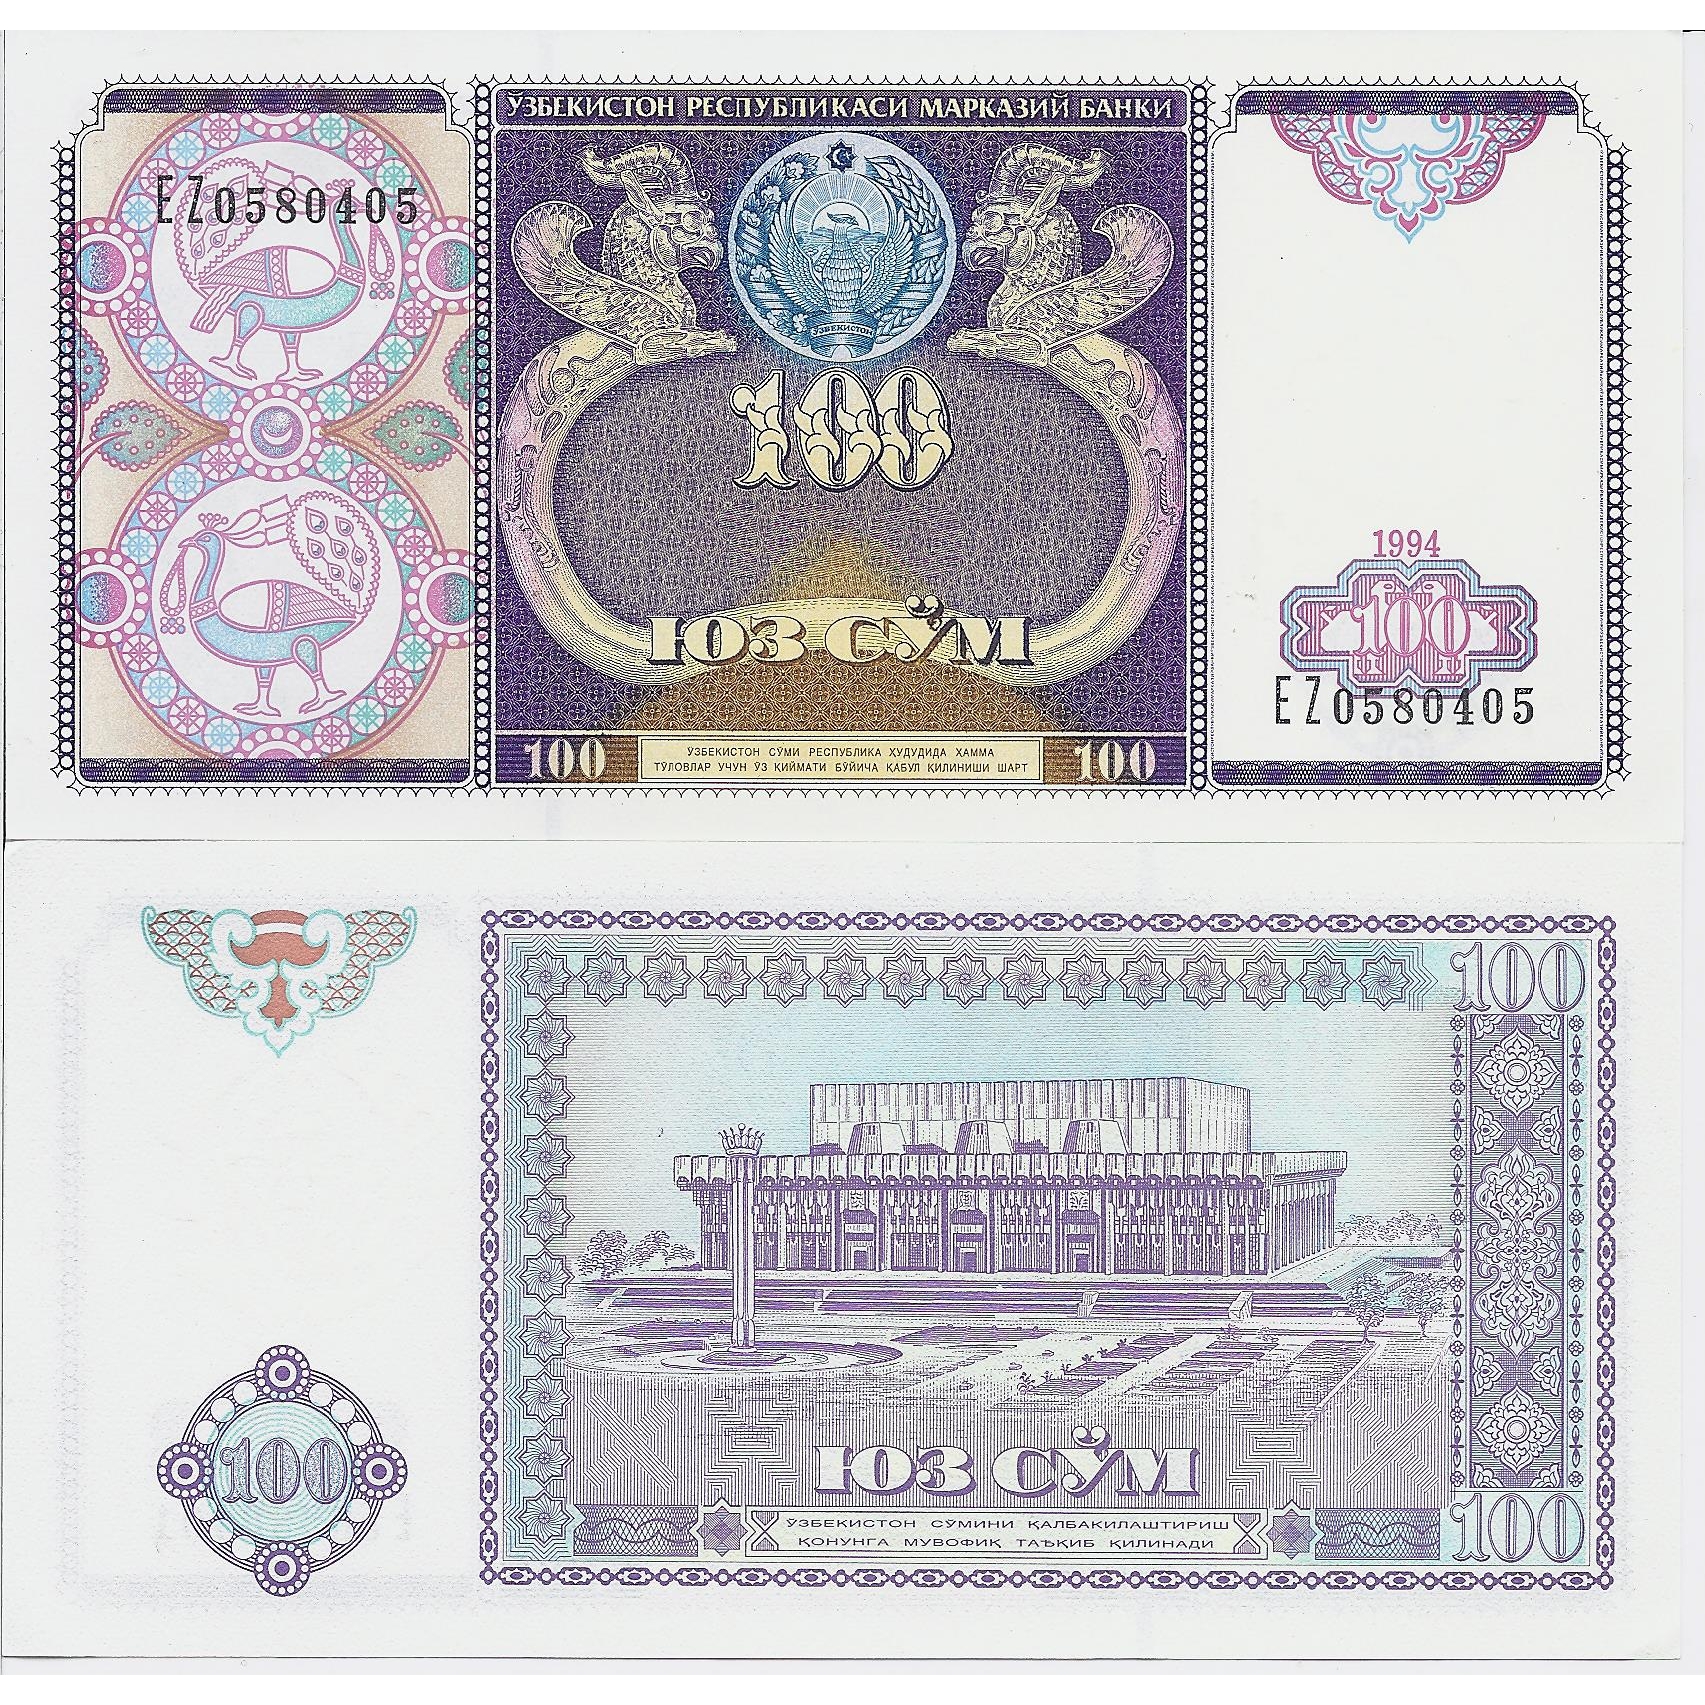 1 сумм узбекский. Банкноты Узбекистана 50, 100 сум 1994г. Узбекский 100 сум 1994 год. Банкнота 100 сум 1994 год Узбекистан. Банкнота Узбекистана 1000 сум 2001 года.